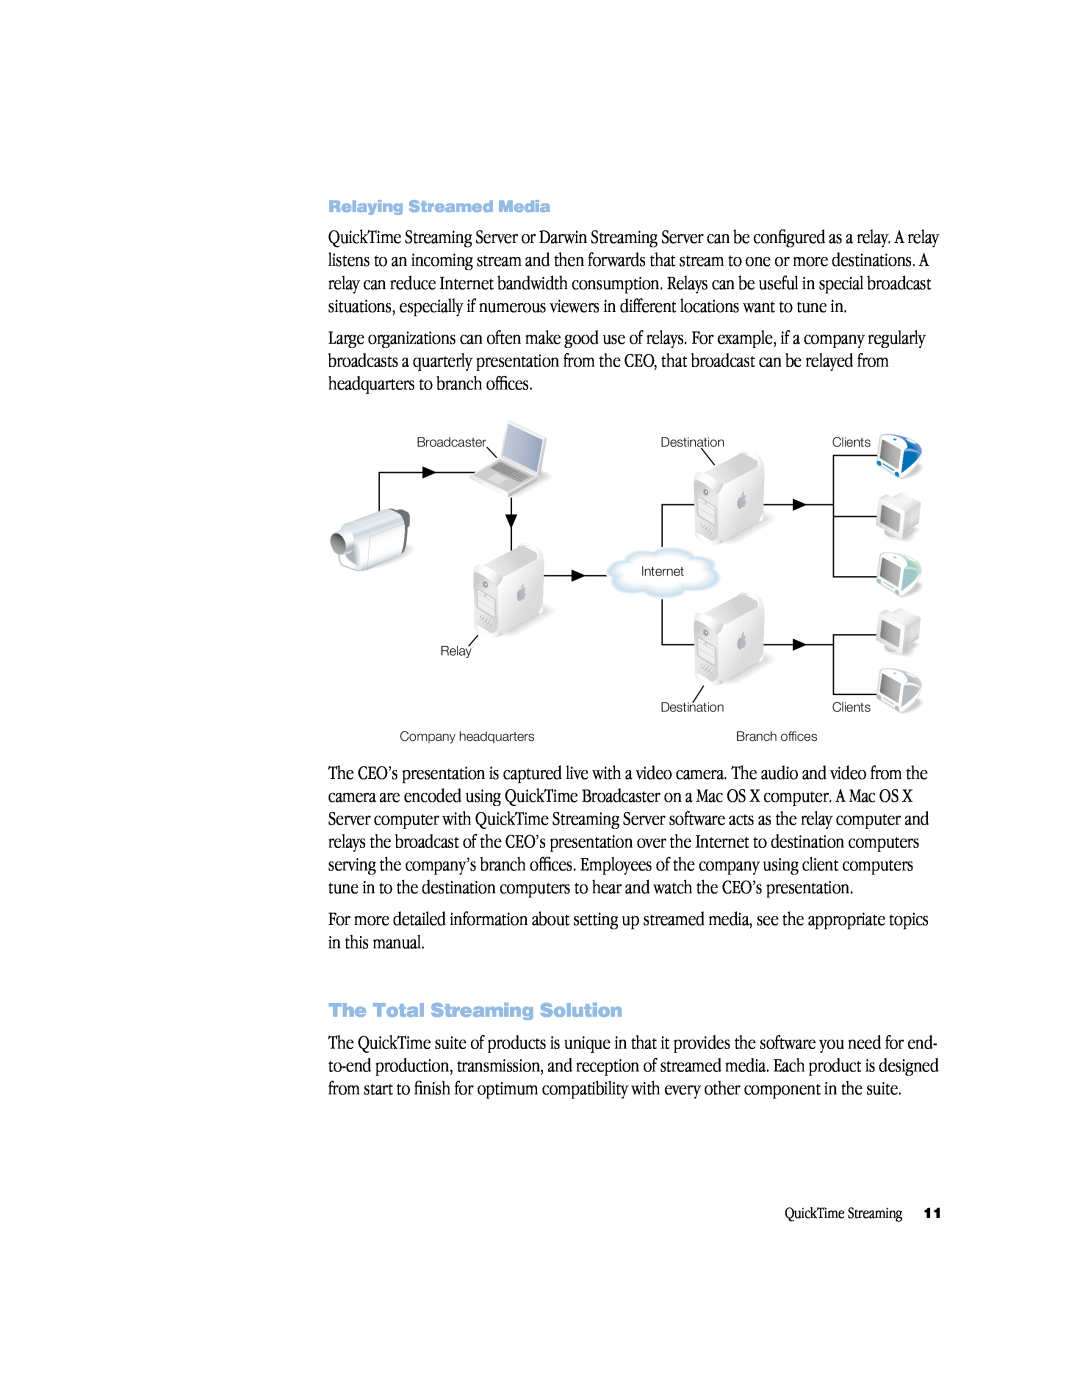 Apple QuickTime Streaming Server Darwin Streaming Server manual The Total Streaming Solution, Relaying Streamed Media 